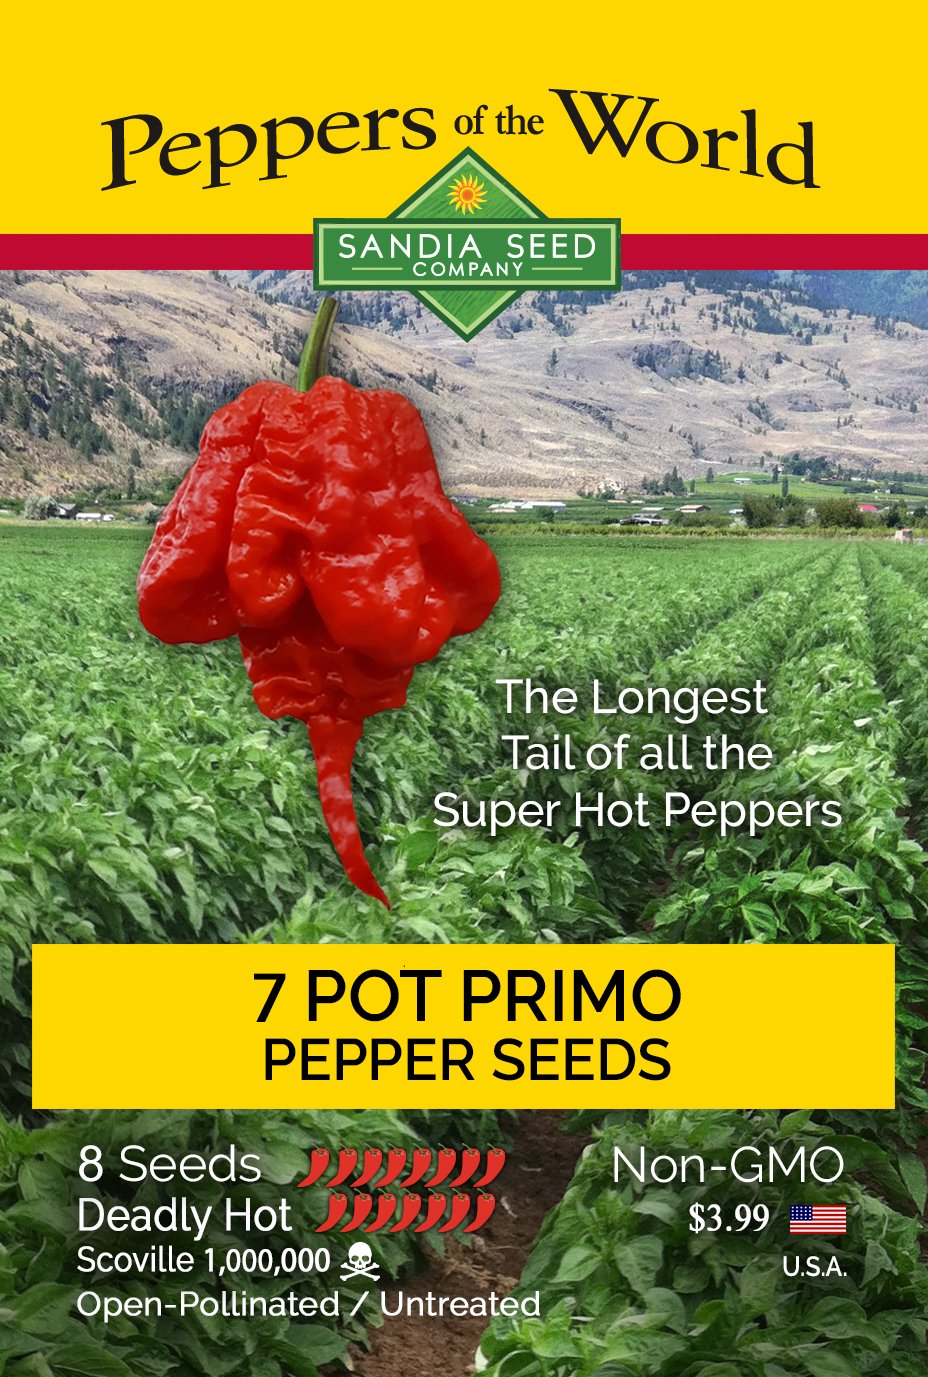 2019 Hot Pepper Seeds - 7 Pot Primo Pepper Seeds